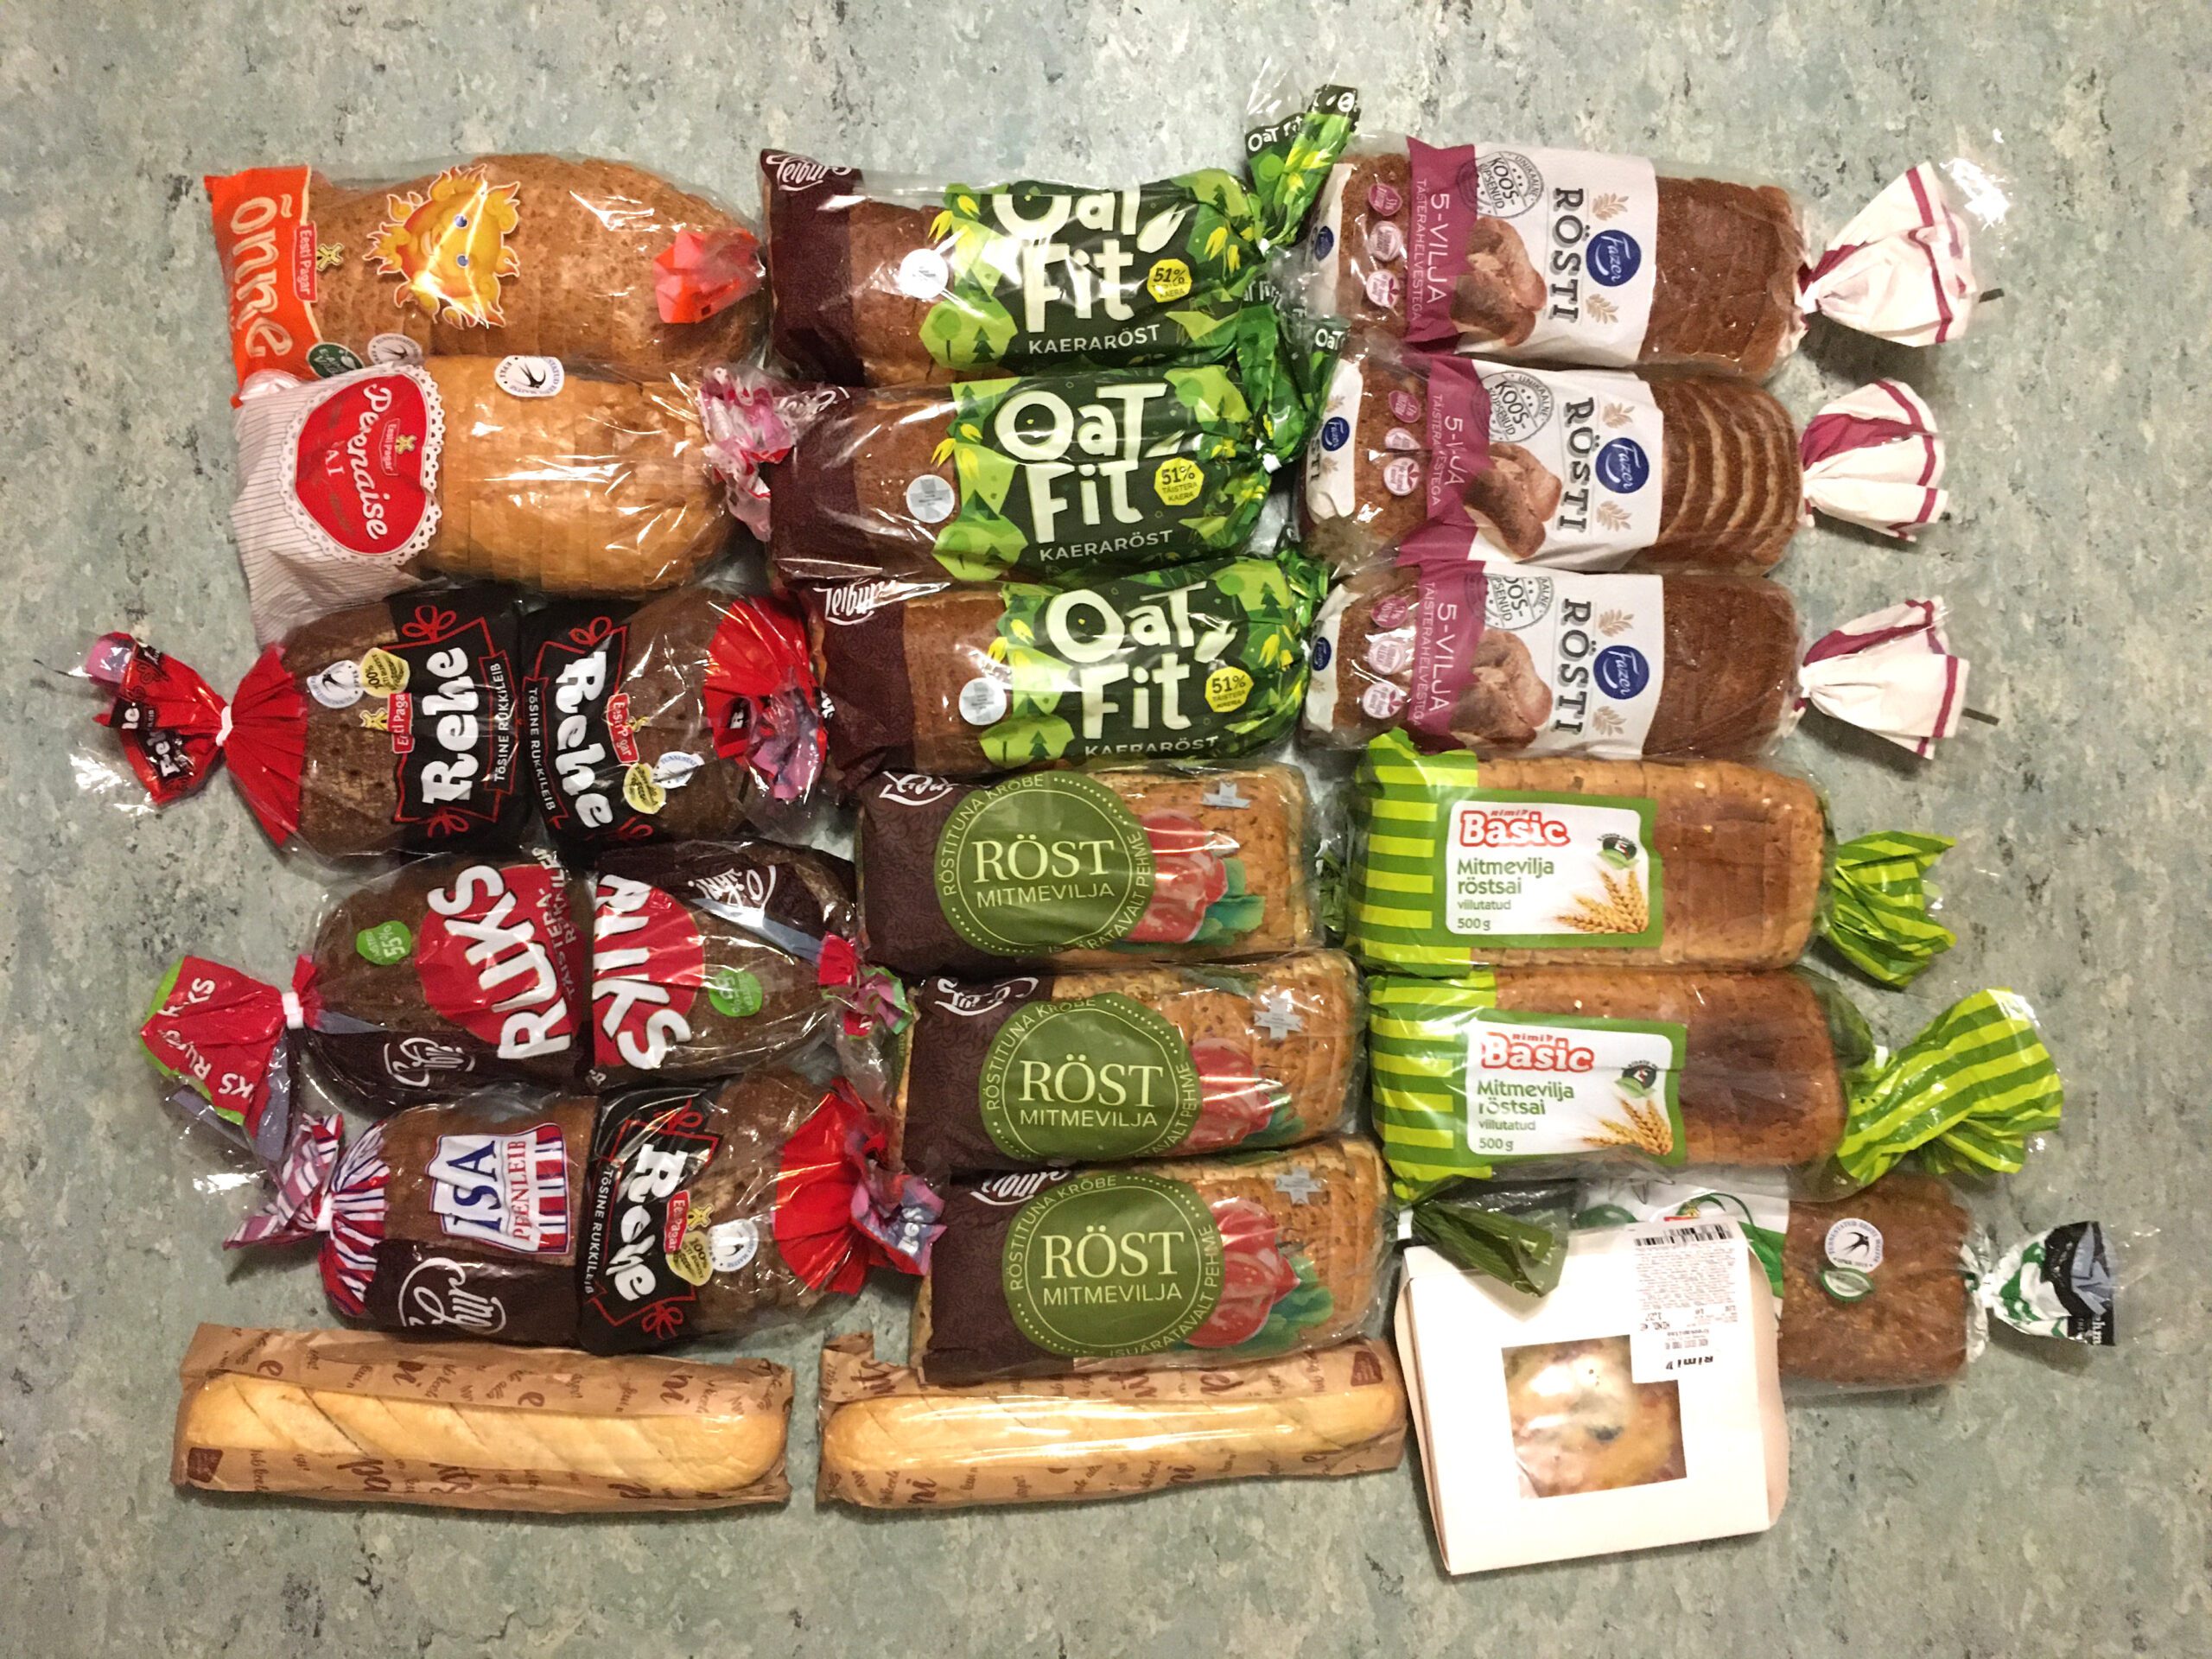 bread saved from an estonian grocery store garbage bin